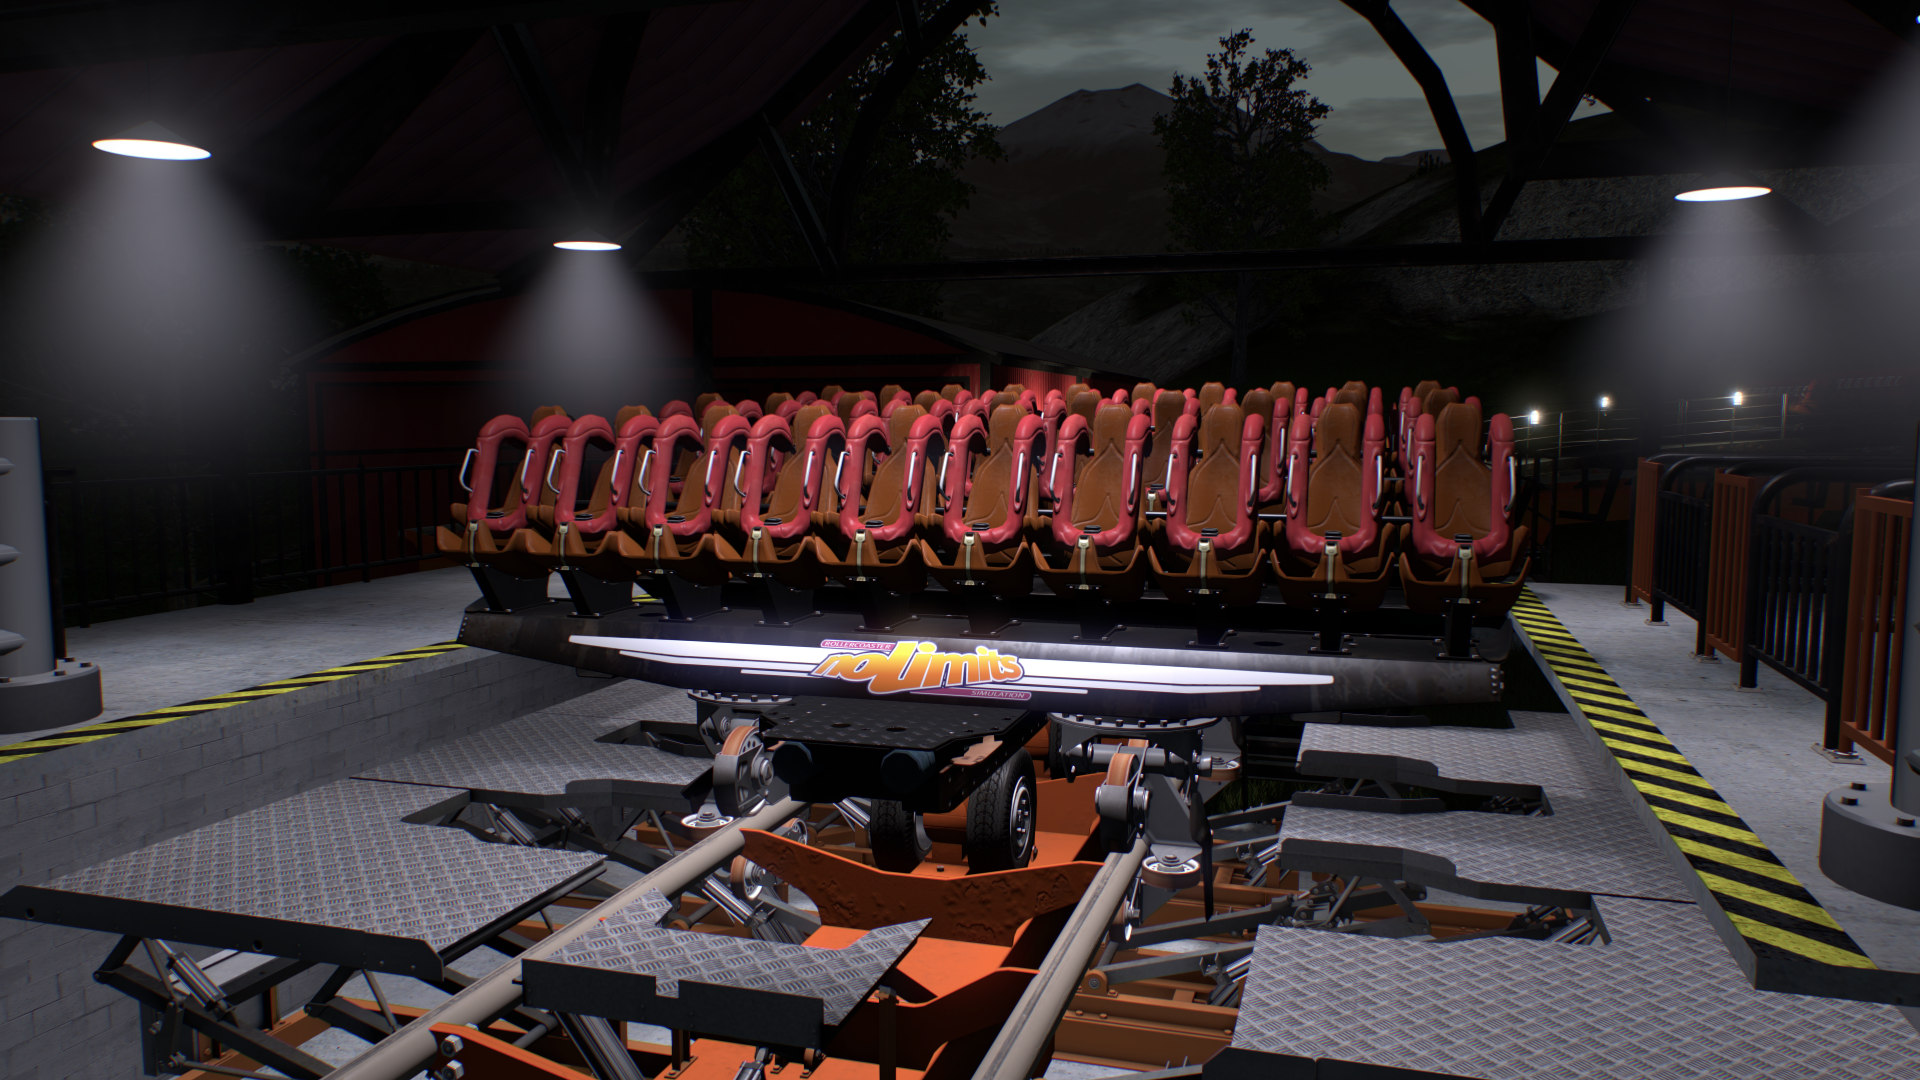 NoLimits 2 Roller Coaster Simulation screenshot